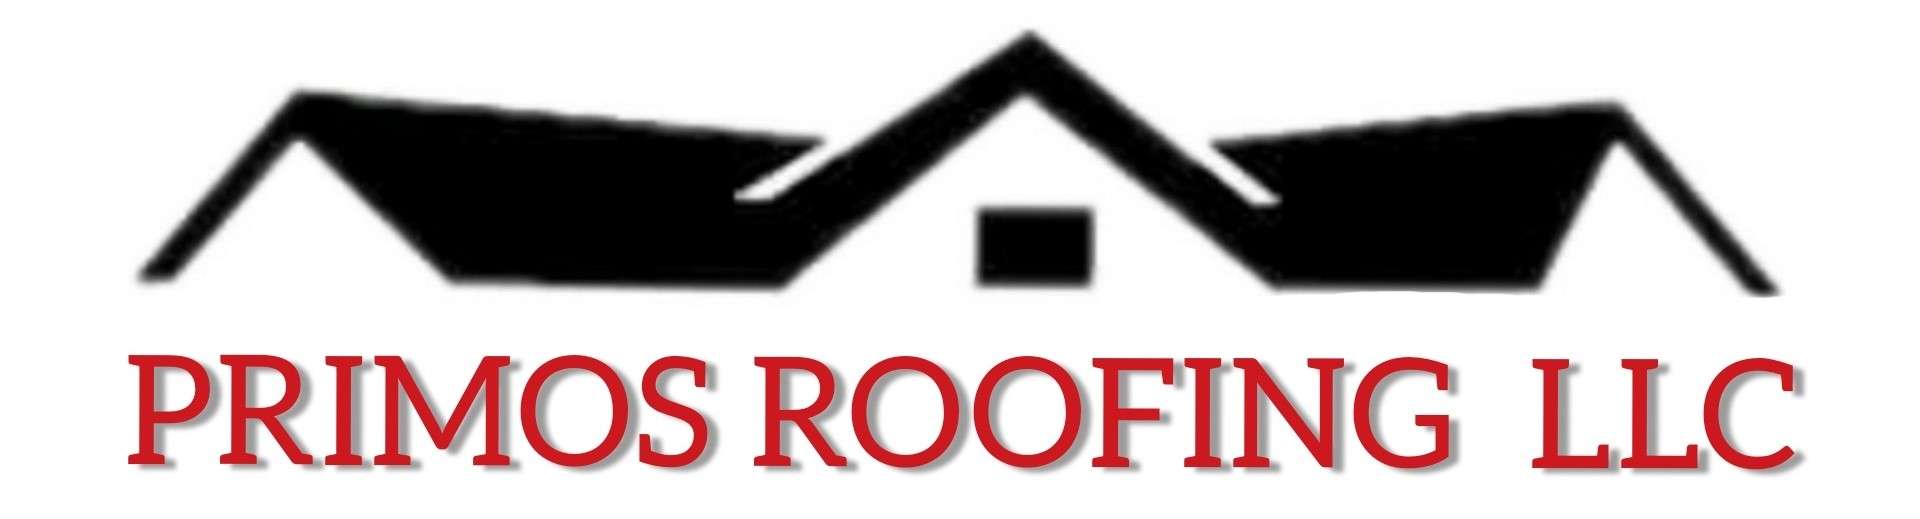 Primos Roofing LLC Logo